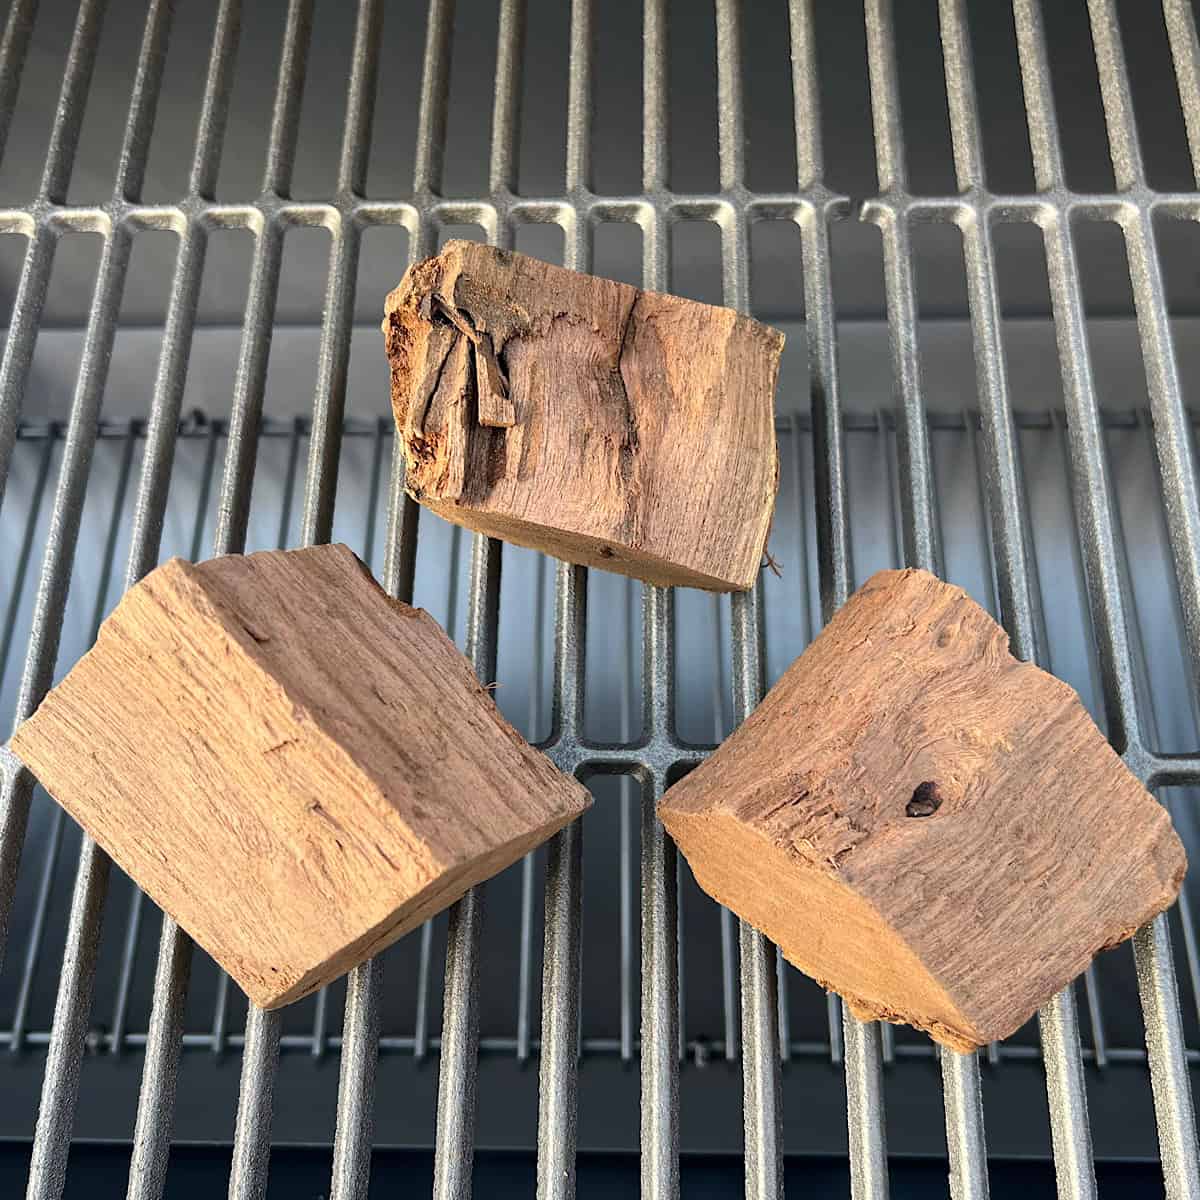 wood chunks sitting on grill